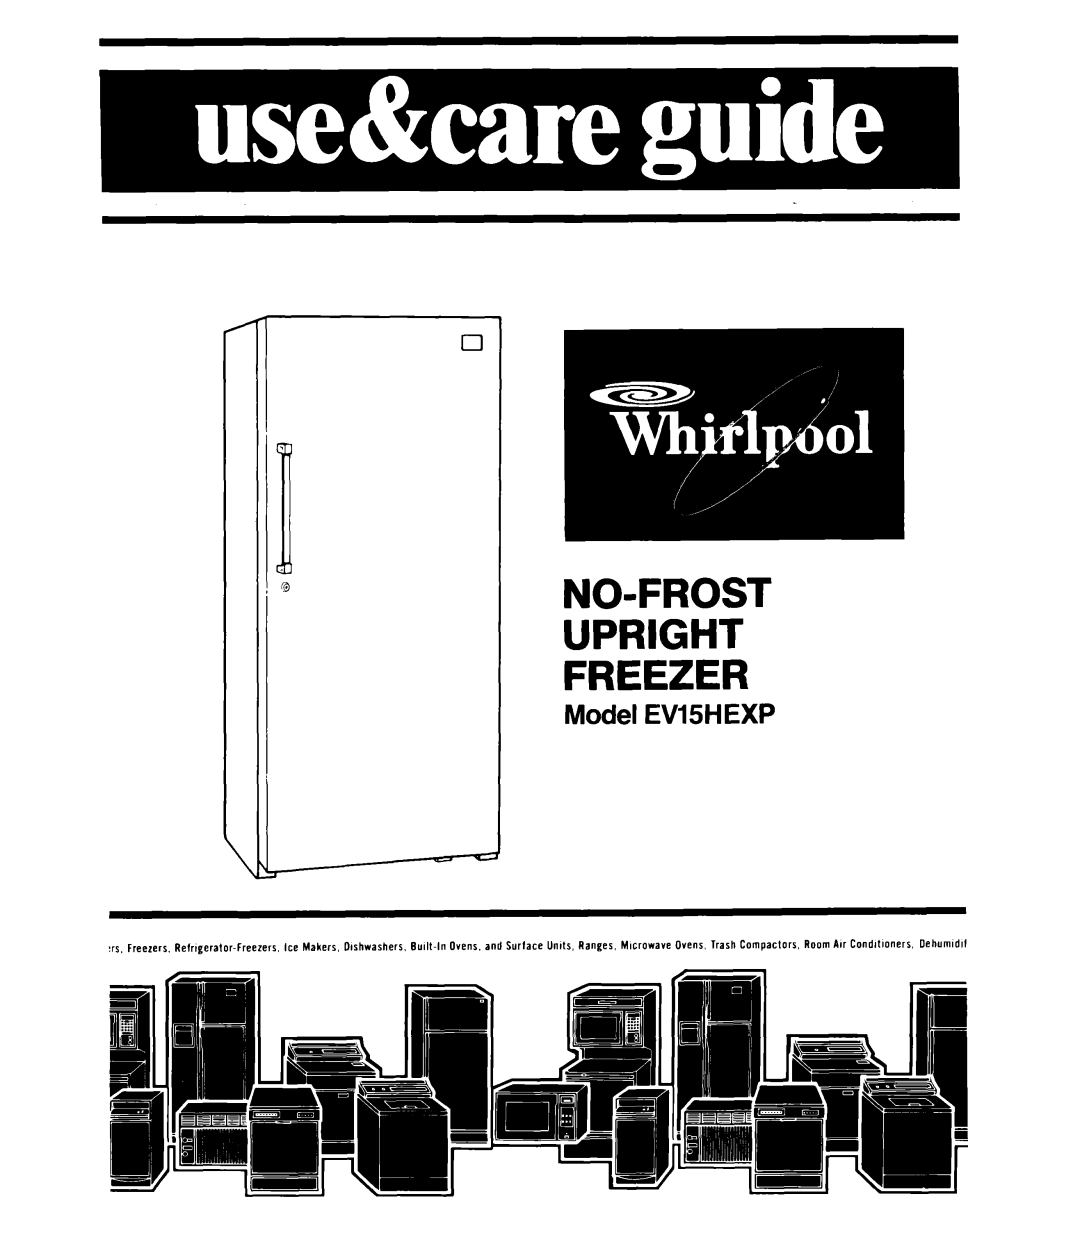 Whirlpool manual Model EVISHEXP, No-Frost Upright Freezer 